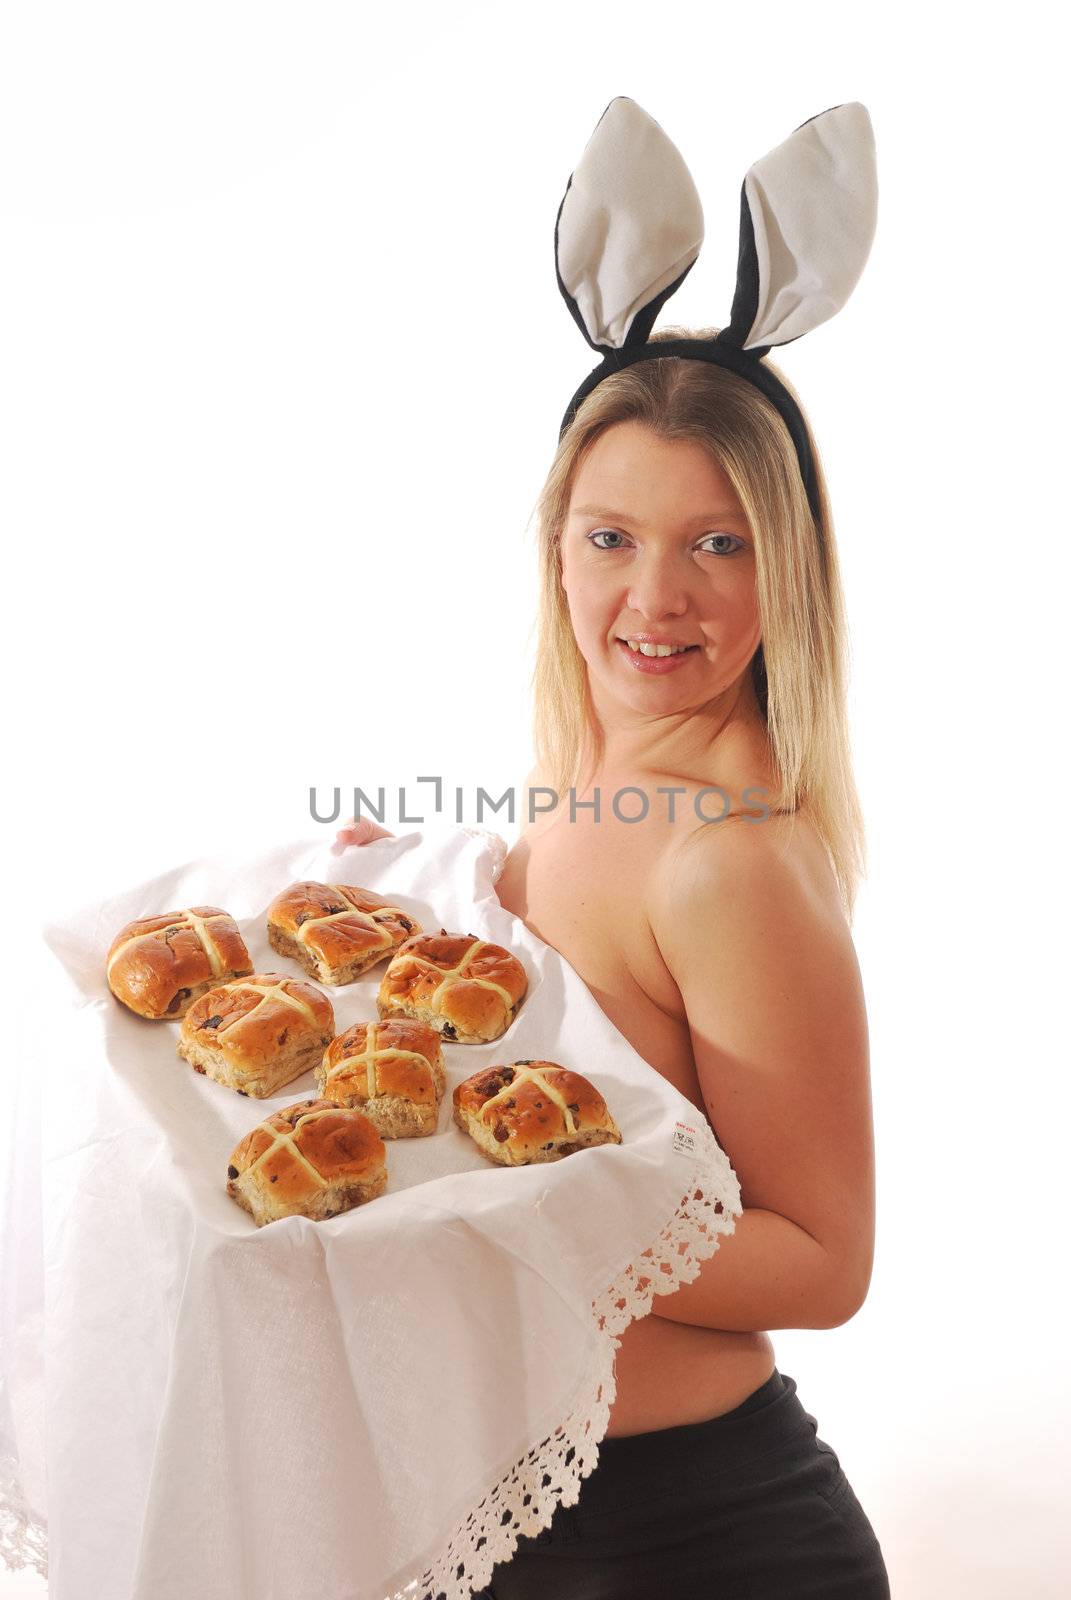 bunny girl with hot cross buns